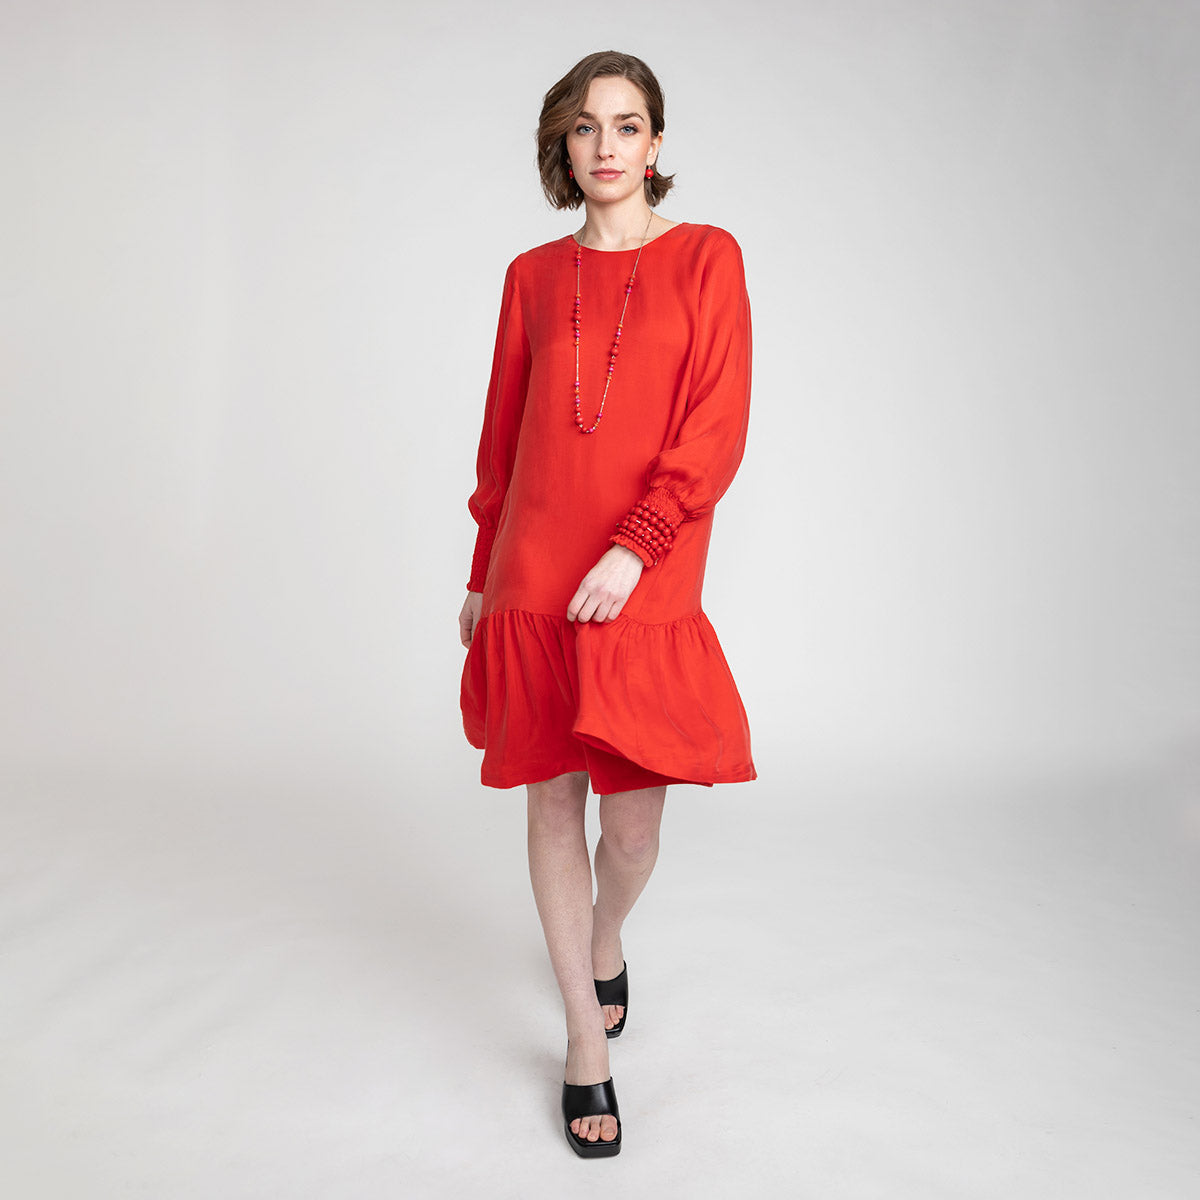 Verla dress, red